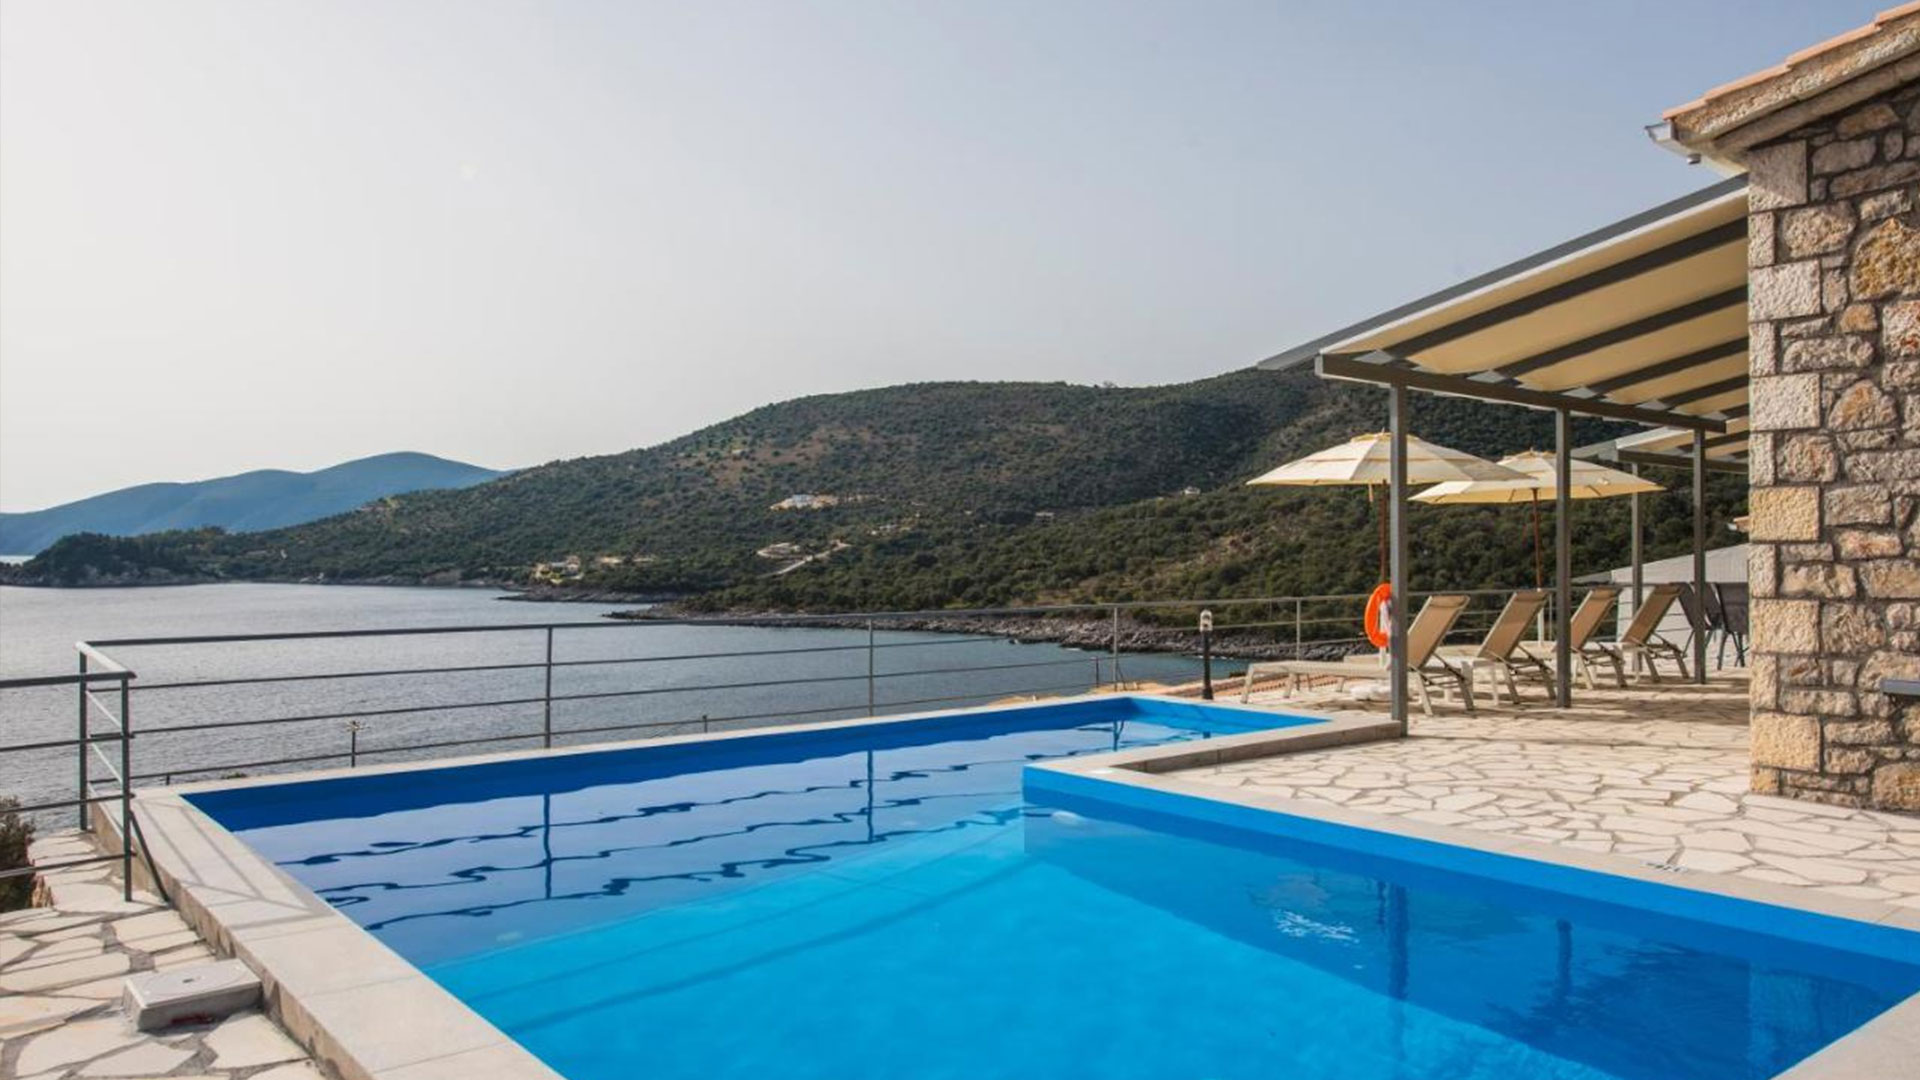 Private pool villa in Marantochori, Lefkada with a sweeping view of the Ionian Sea.